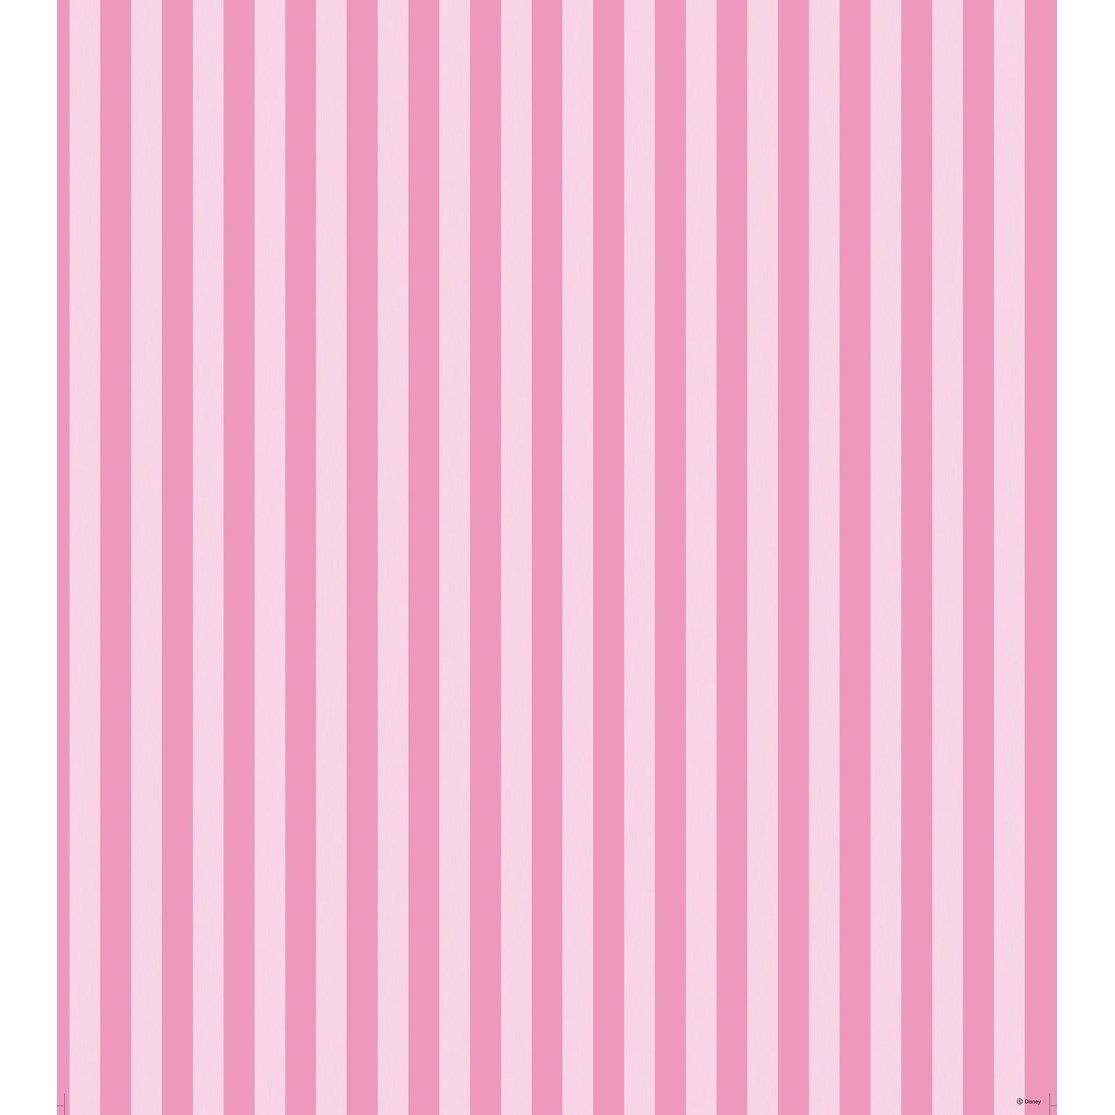 AG Art Dětská fototapeta Pink stripes, 53 x 1005 cm  - 4home.cz